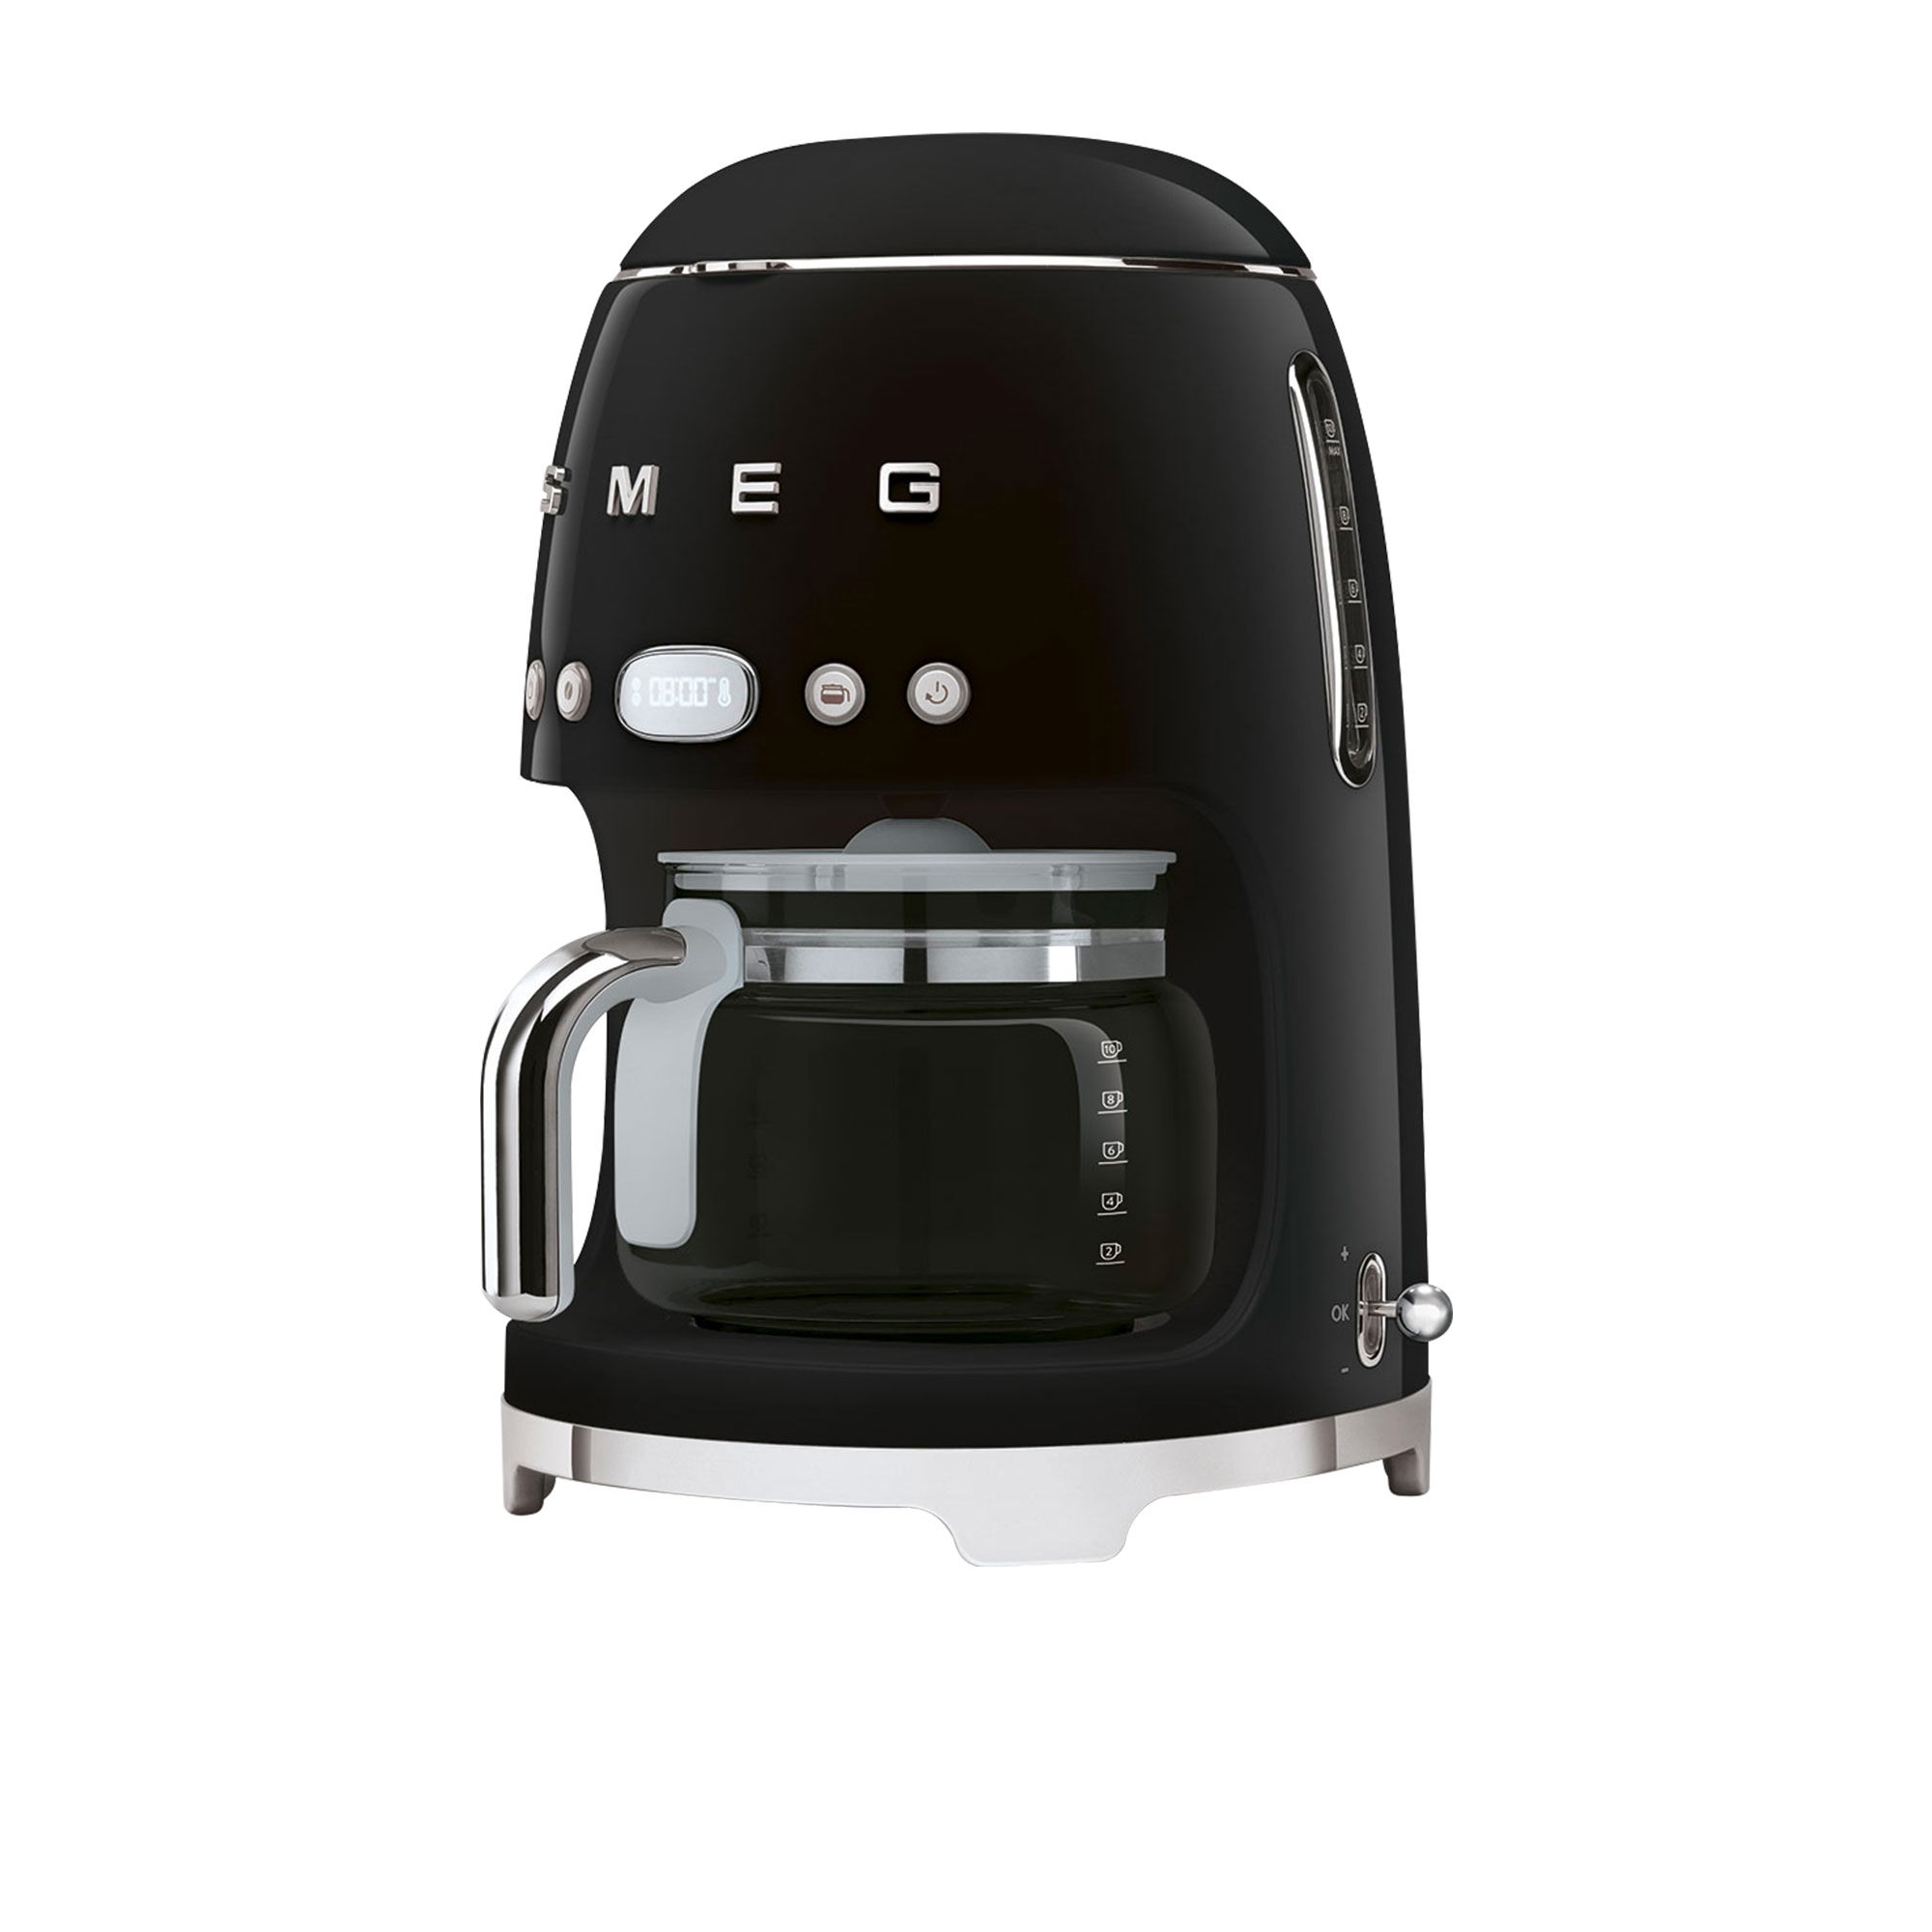 Smeg 50's Retro Style Drip Filter Coffee Machine Black Image 2